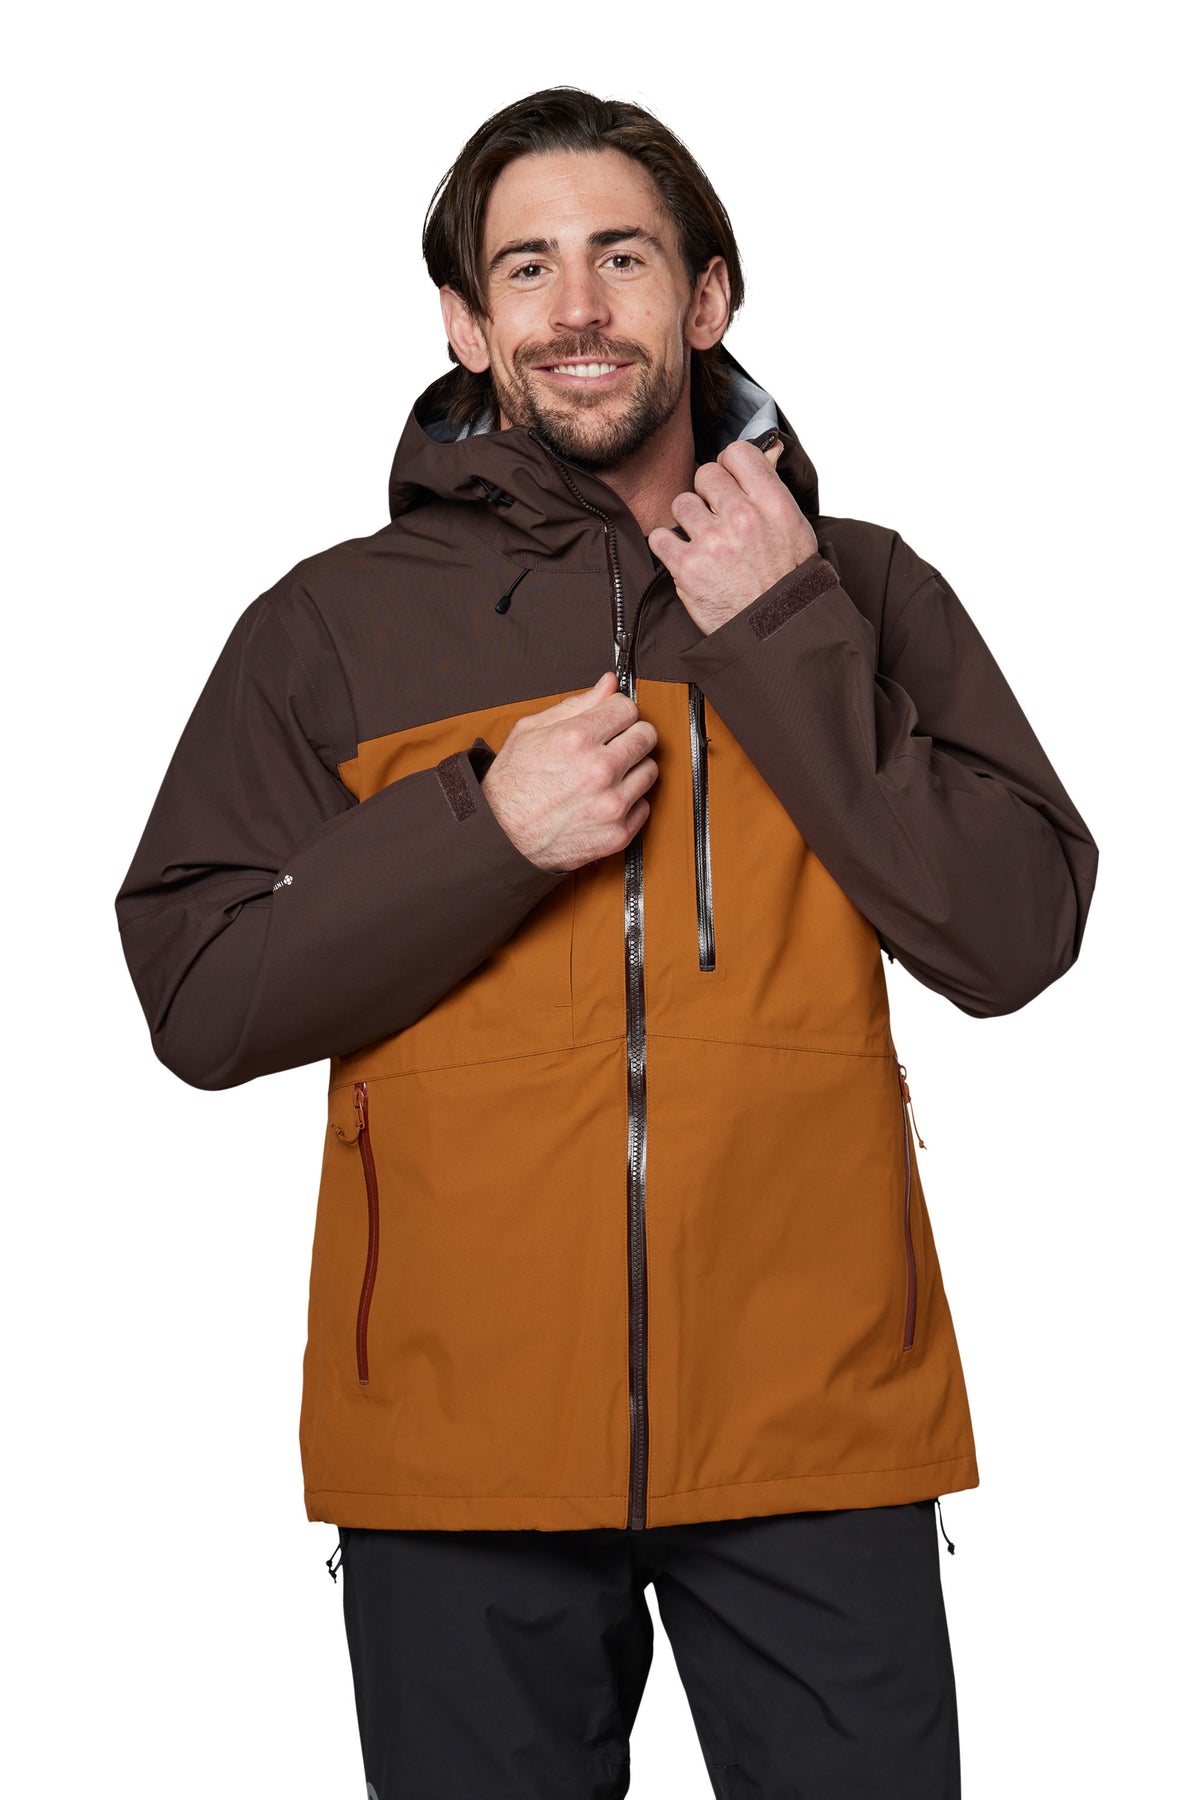 Quantum Pro Jacket - Men's Backcountry Ski Jacket